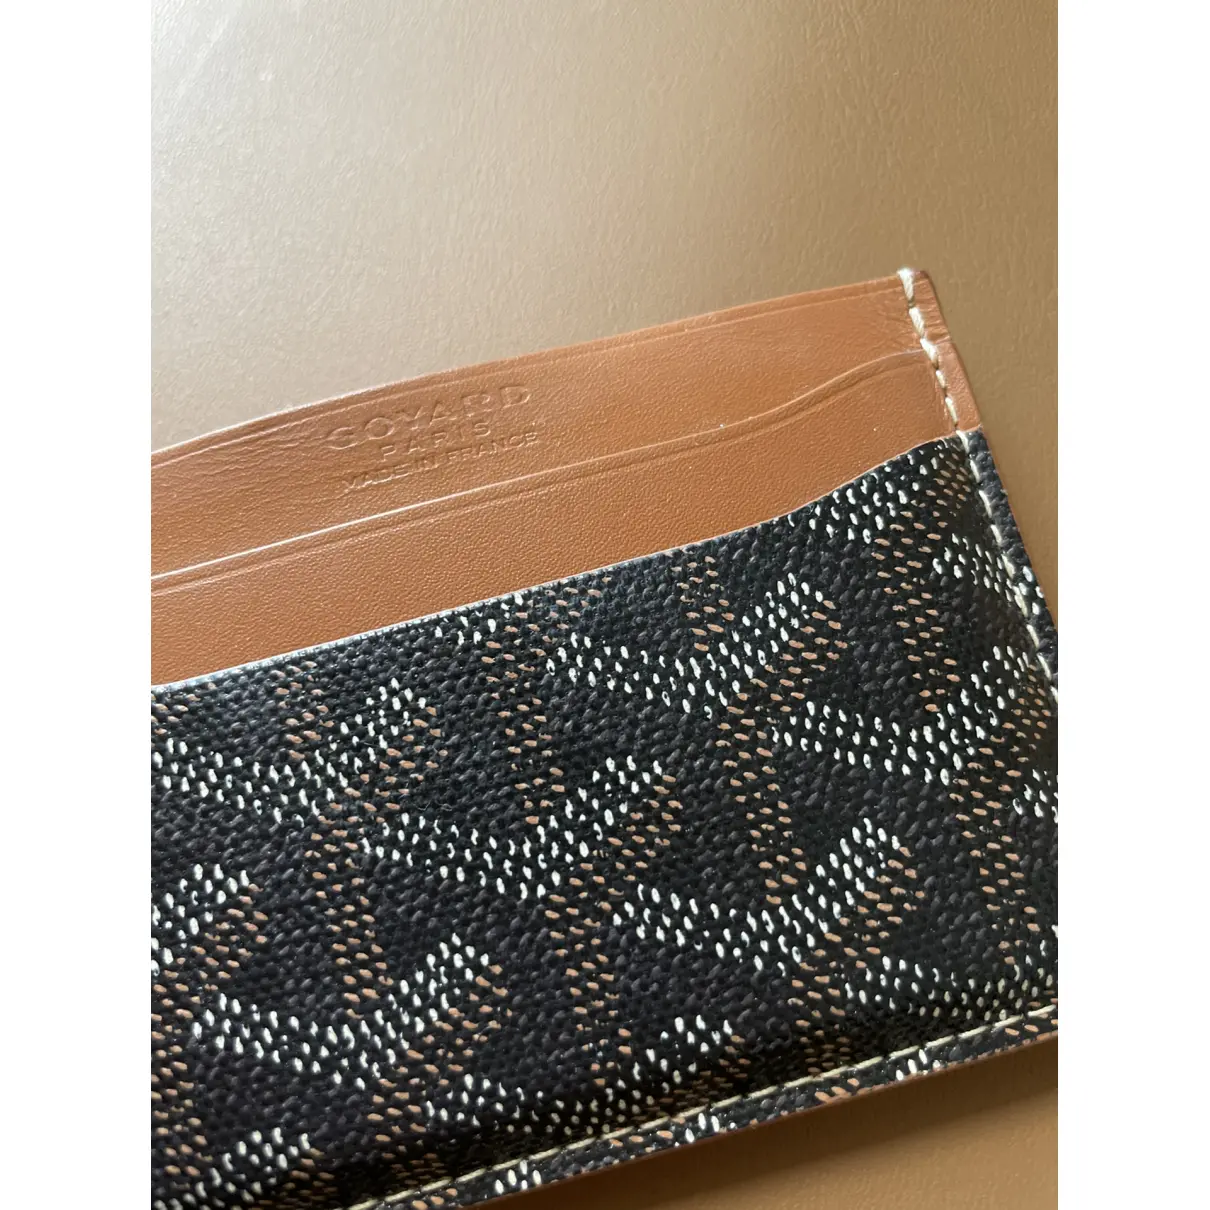 Leather wallet Goyard